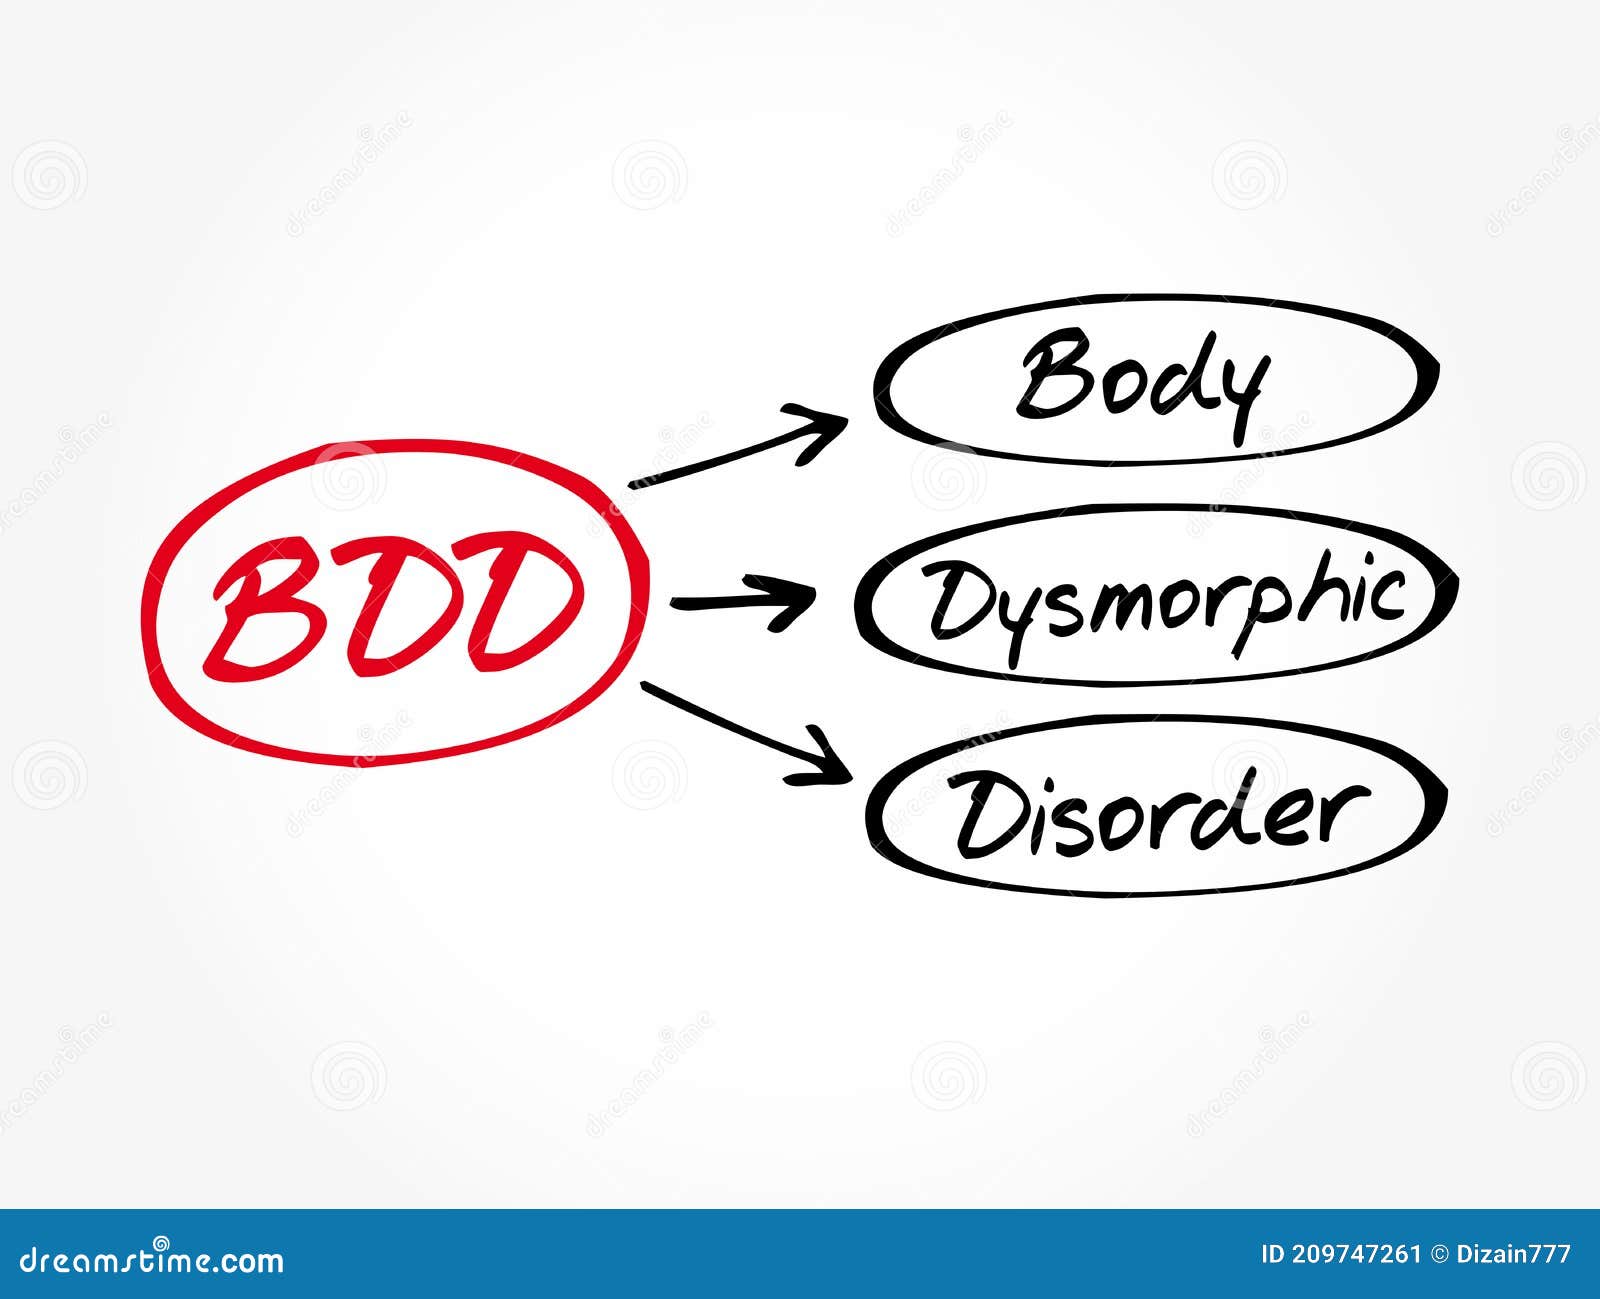 bdd - body dysmorphic disorder acronym, health concept background